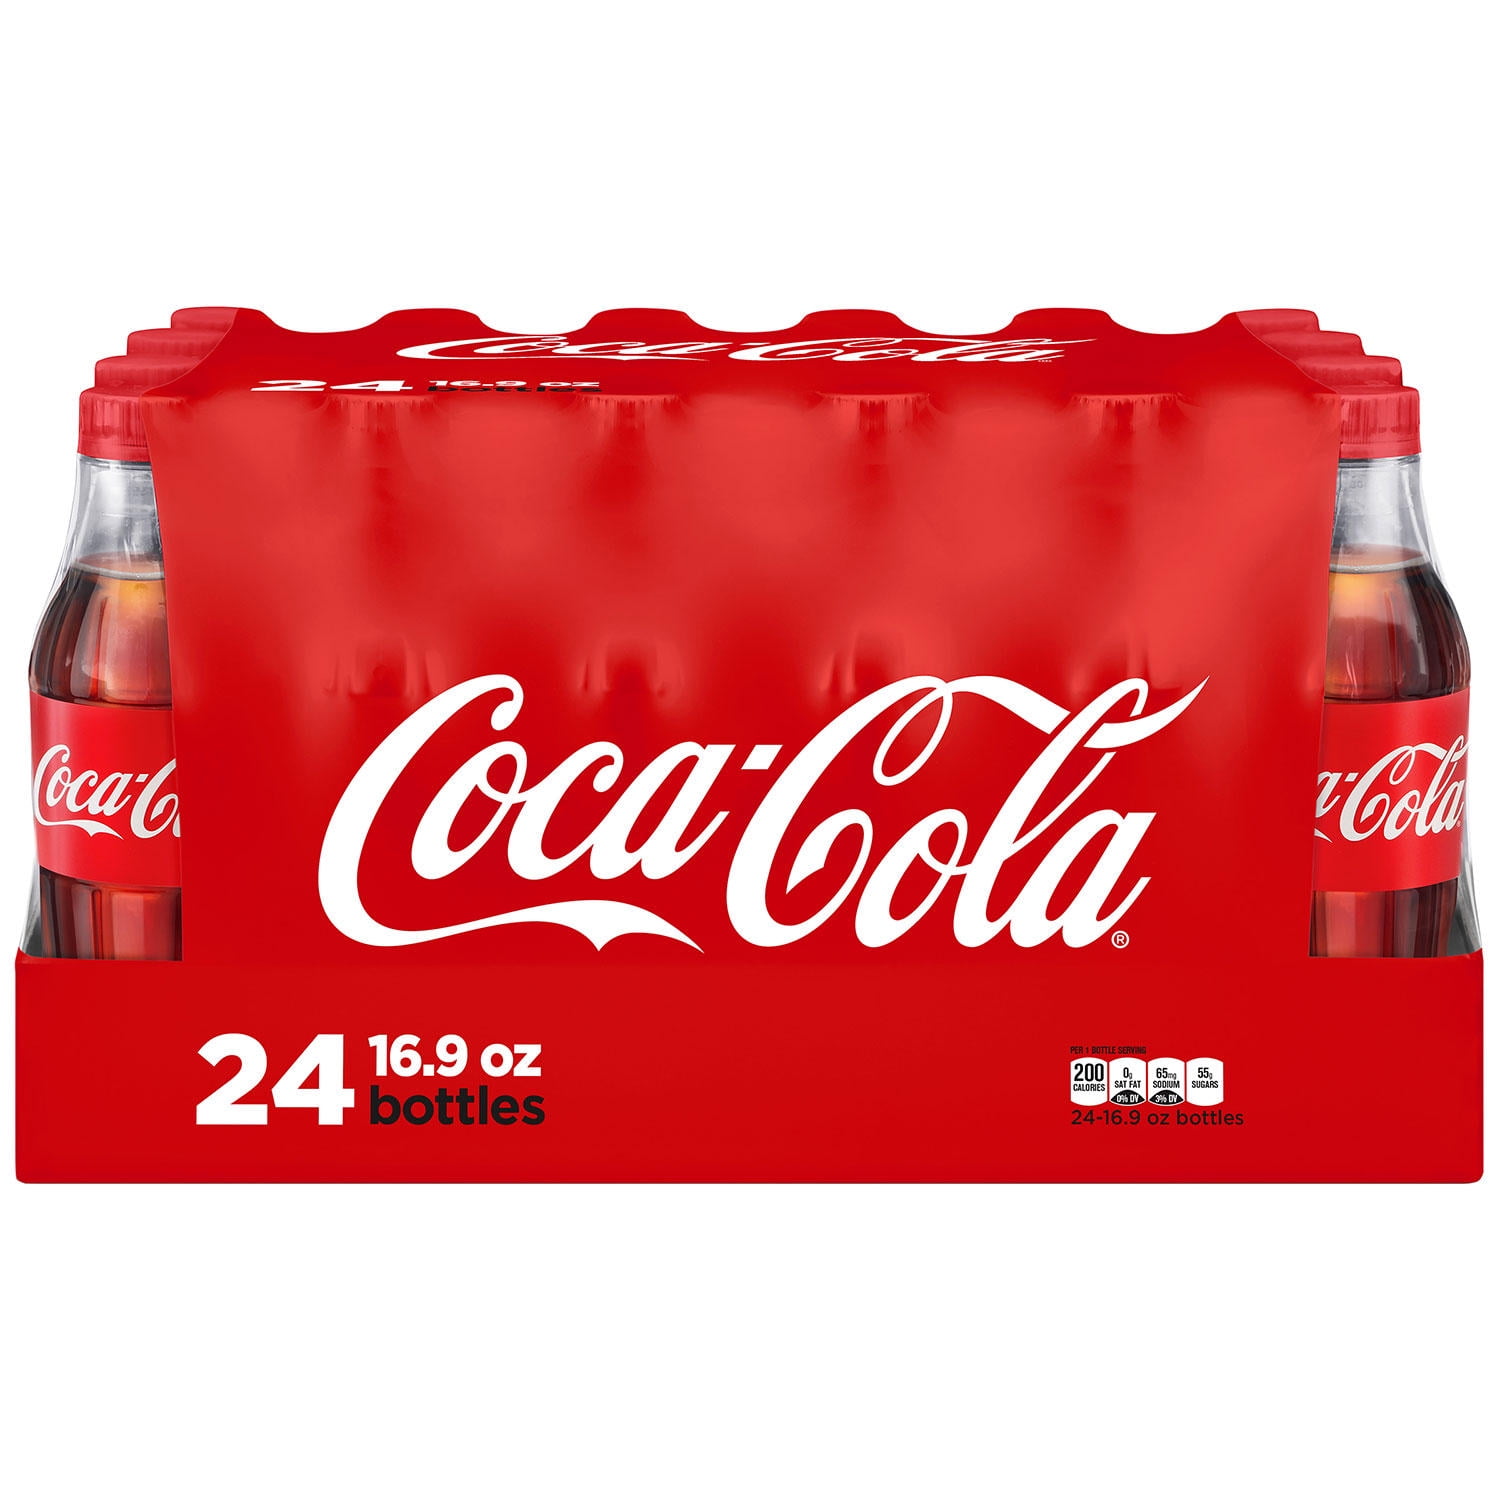 WHILE WE CHECK TIRES  METAL COOL  Soda Pop ENJOY  COCA COLA ADVERTISING 